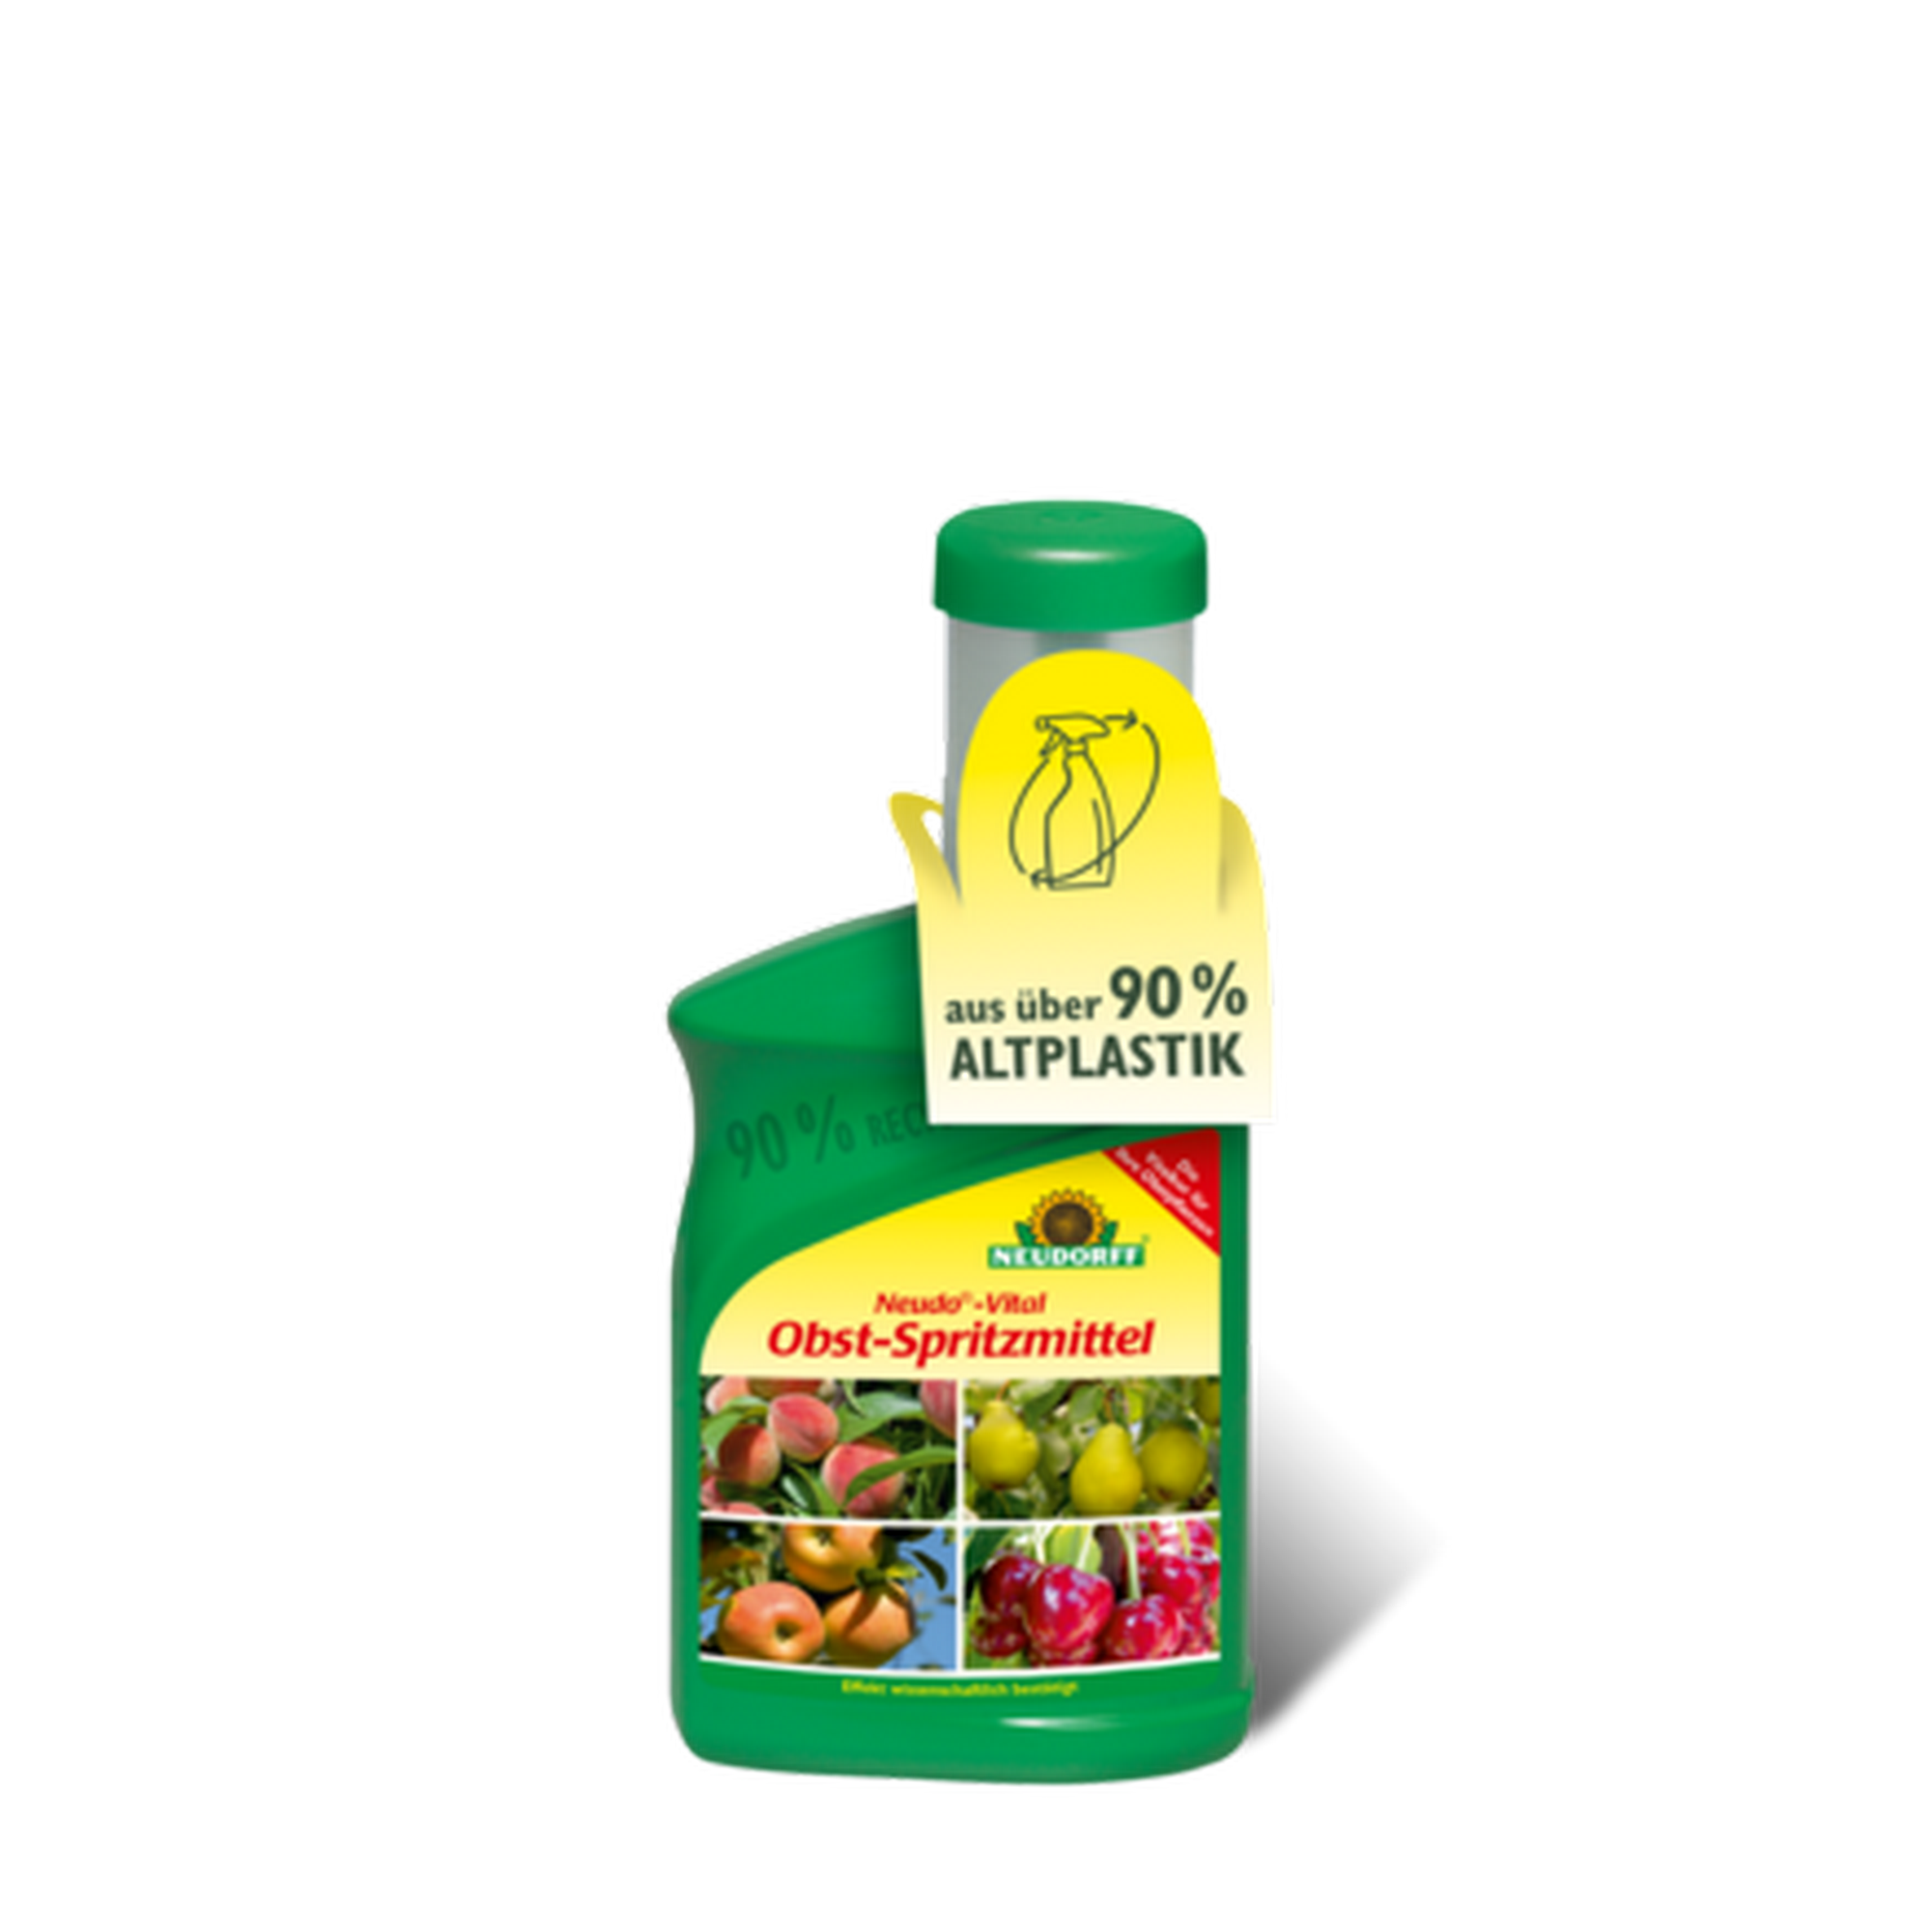 Neudo-Vital Obst-Spritzmittel 250 ml + product picture